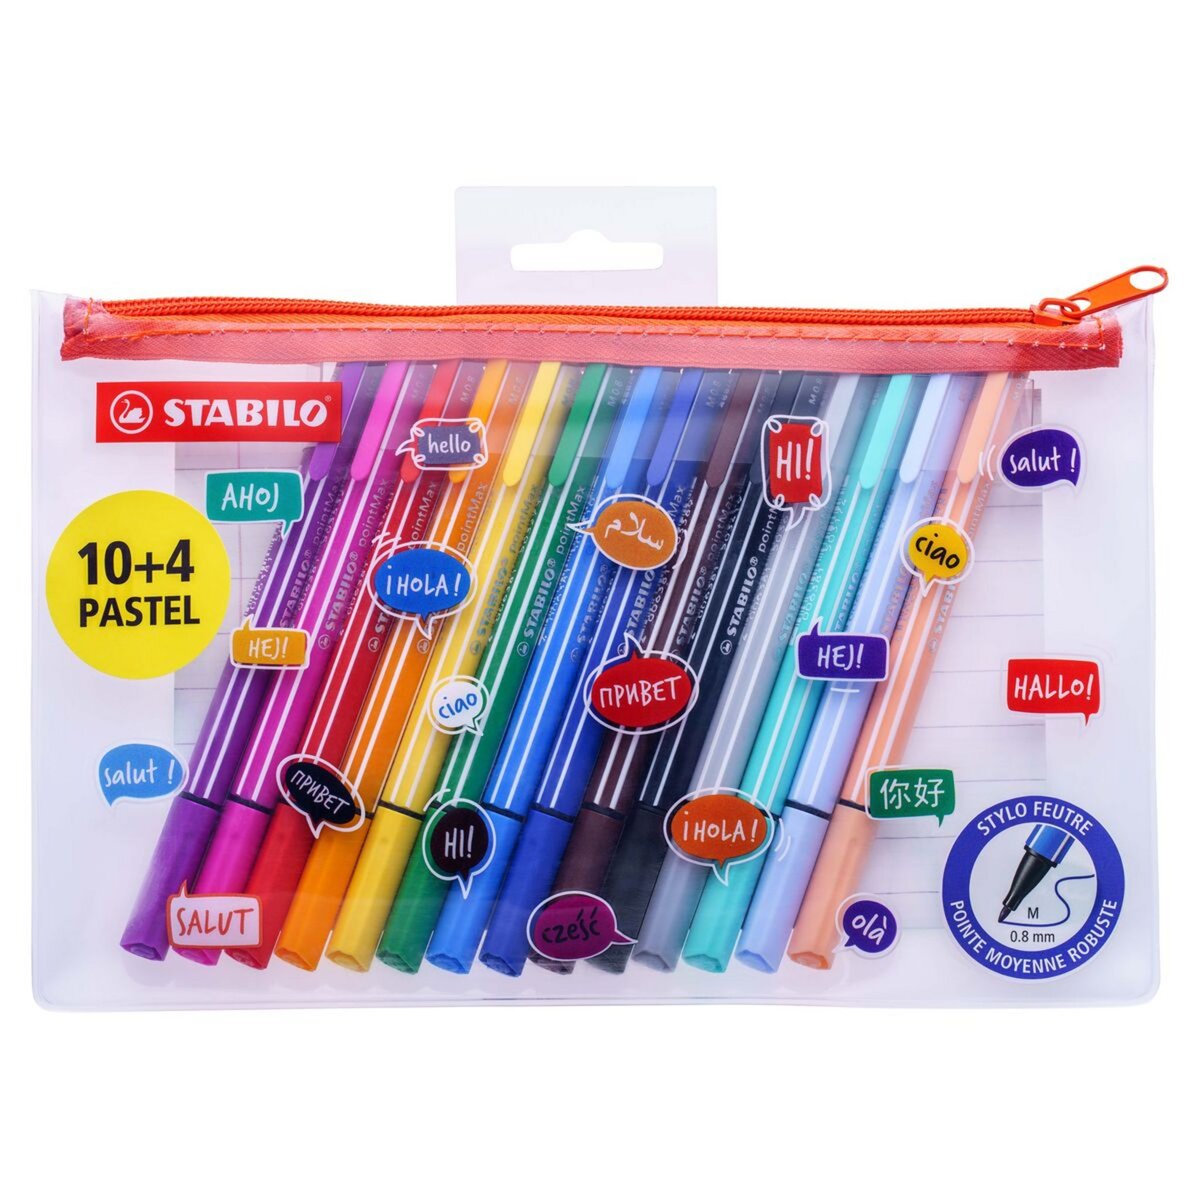 STABILO pointMax - 4 stylos feutre Bright Colors (pointe 0,8mm)